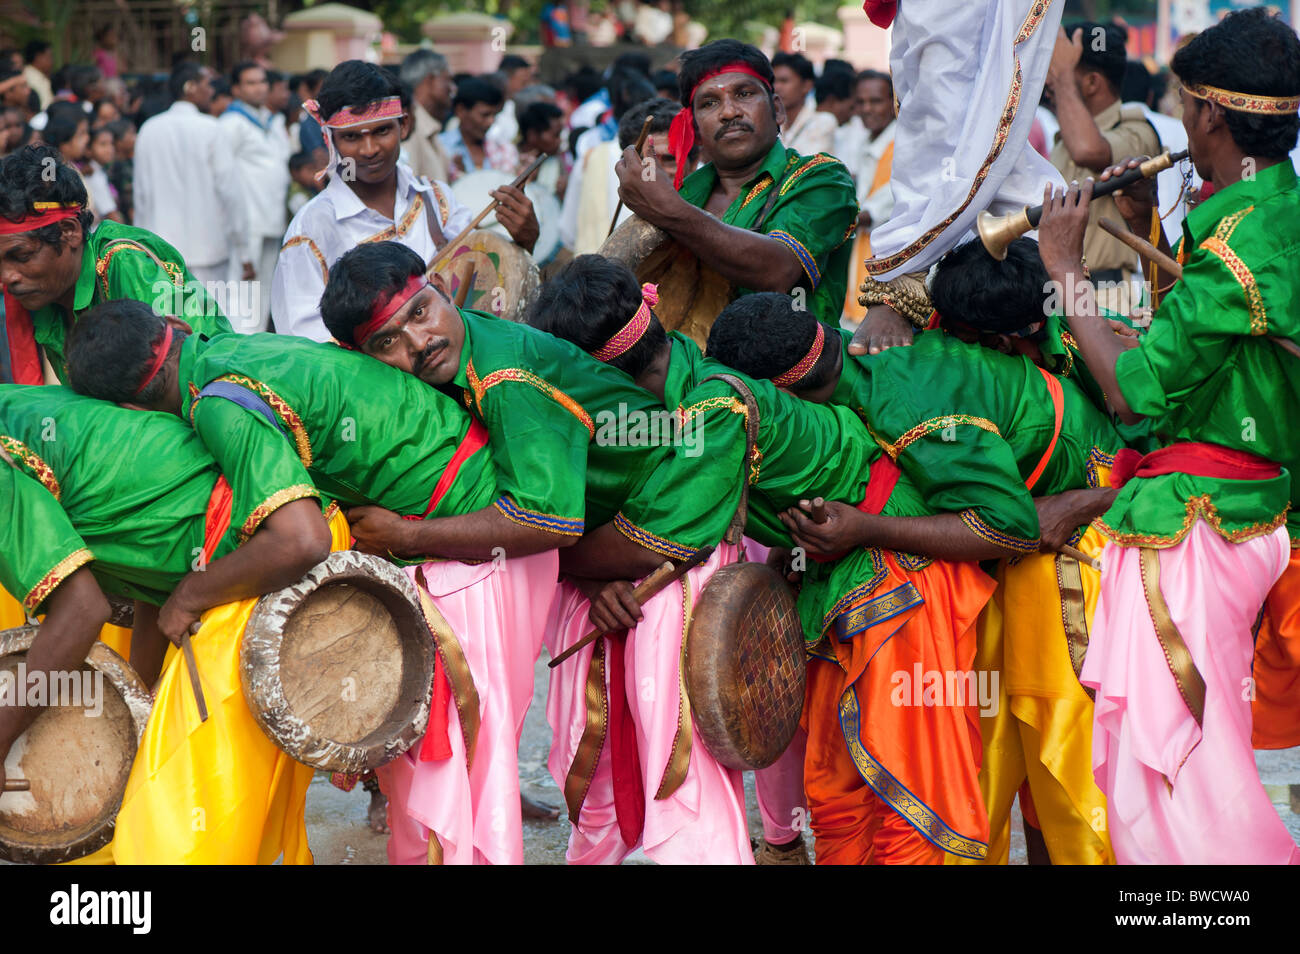 Indian festival drumming street performers at Sathya Sai Baba 85th birthday celebrations in Puttaparthi, Andhra Pradesh, India Stock Photo